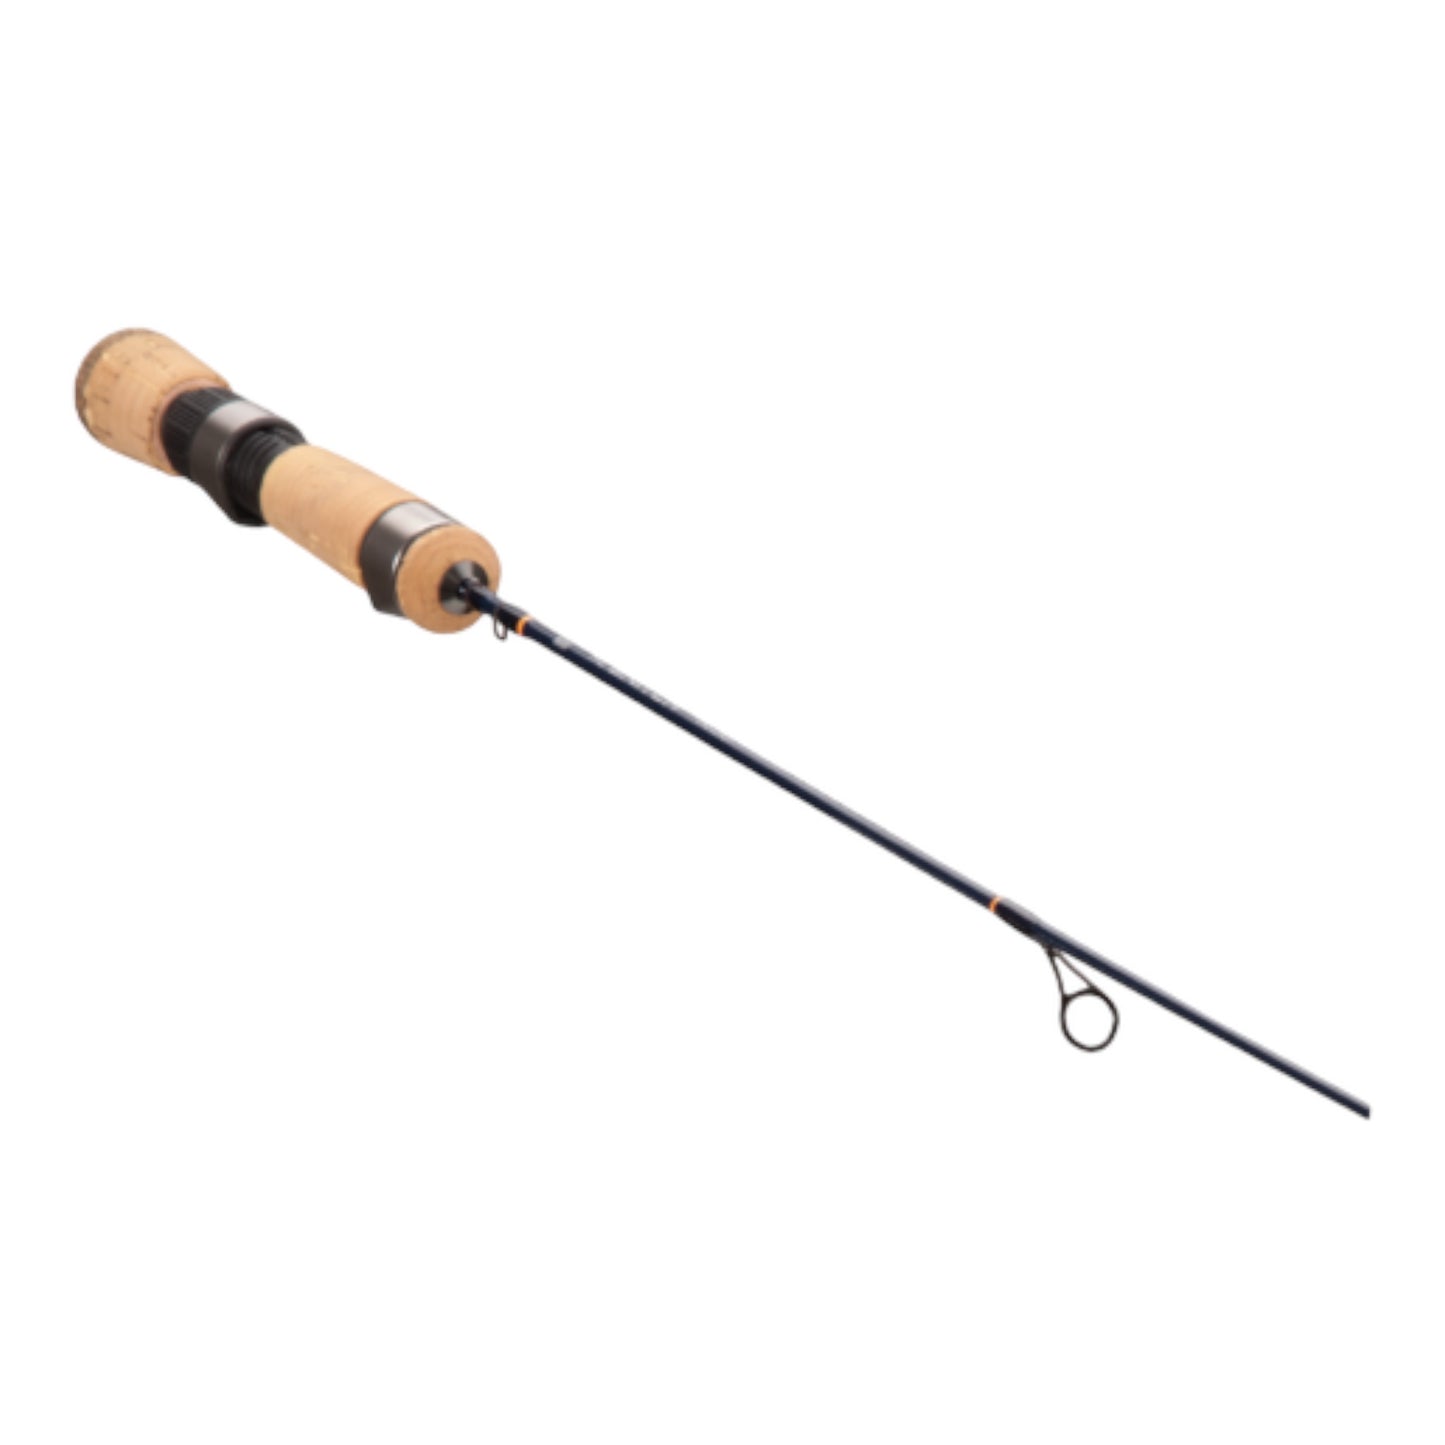 13 Fishing Snitch 3 Ice Fishing Rod